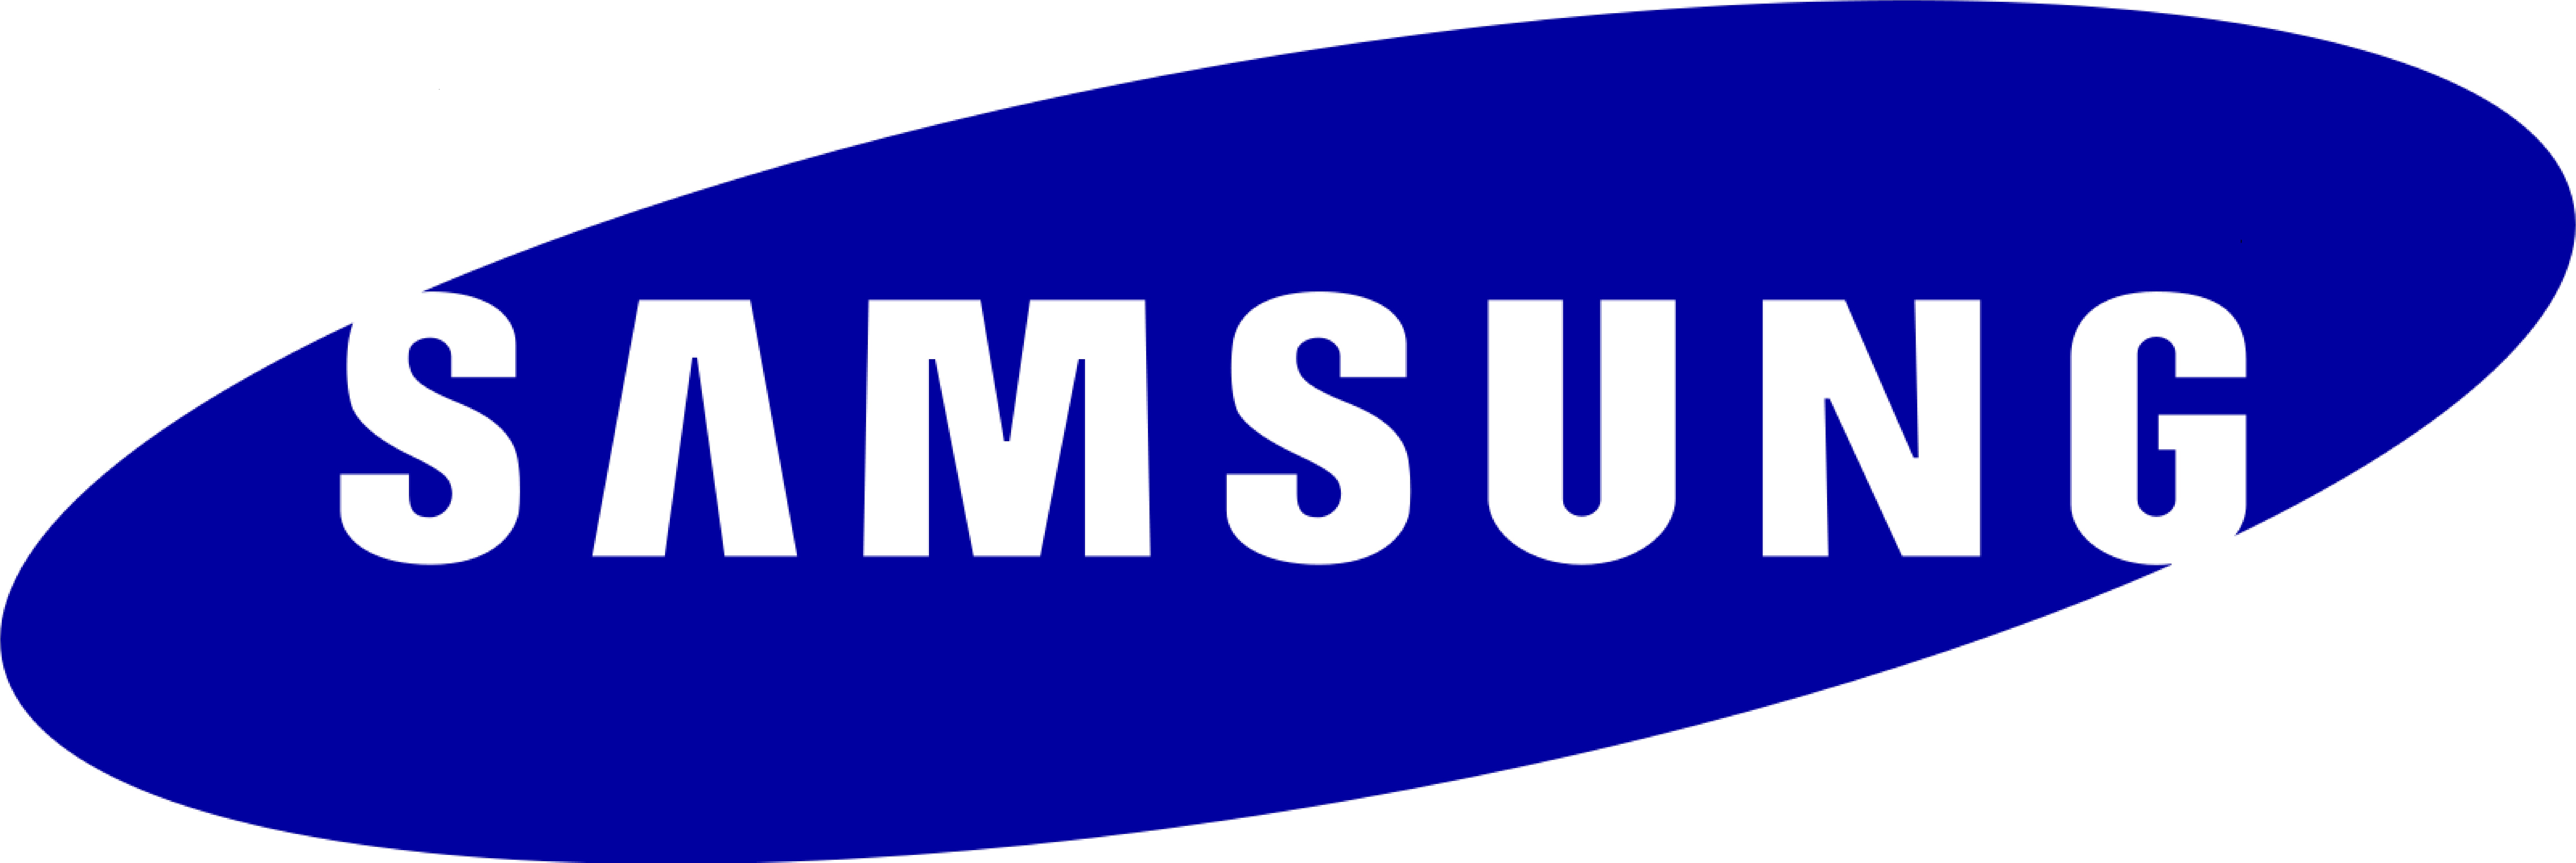 Man Made Samsung 4k Ultra HD Wallpaper